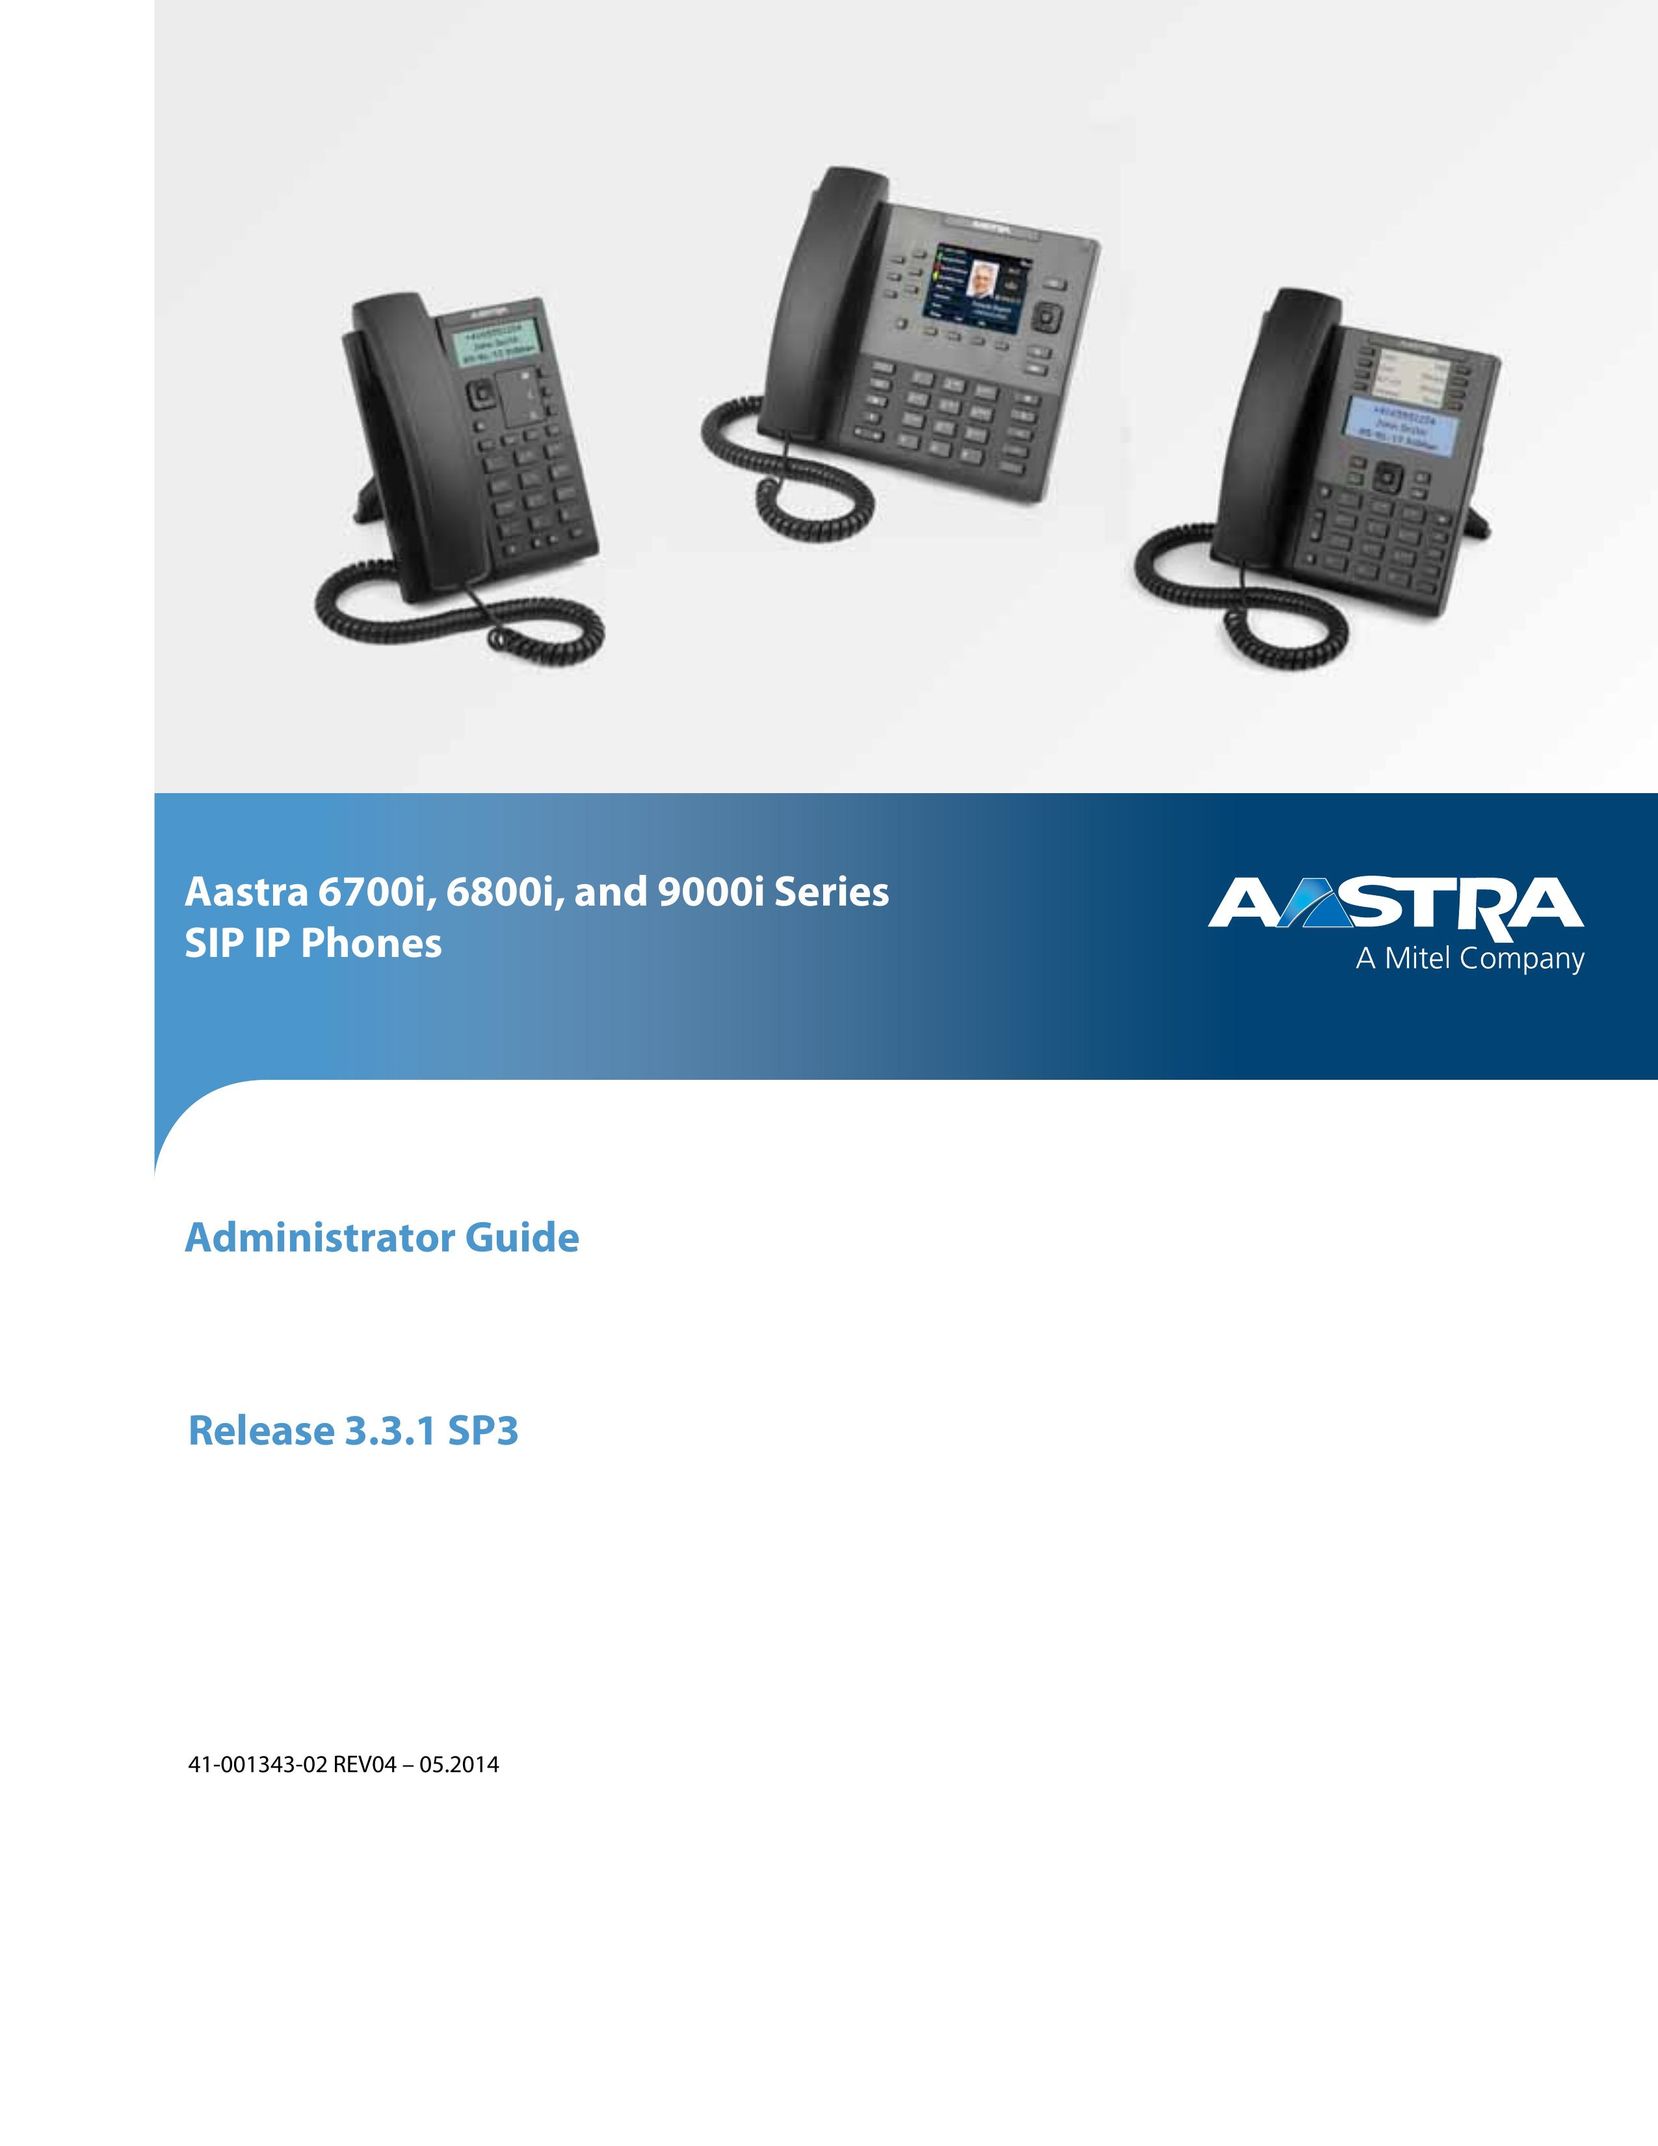 Aastra Telecom 41-001343-02 IP Phone User Manual